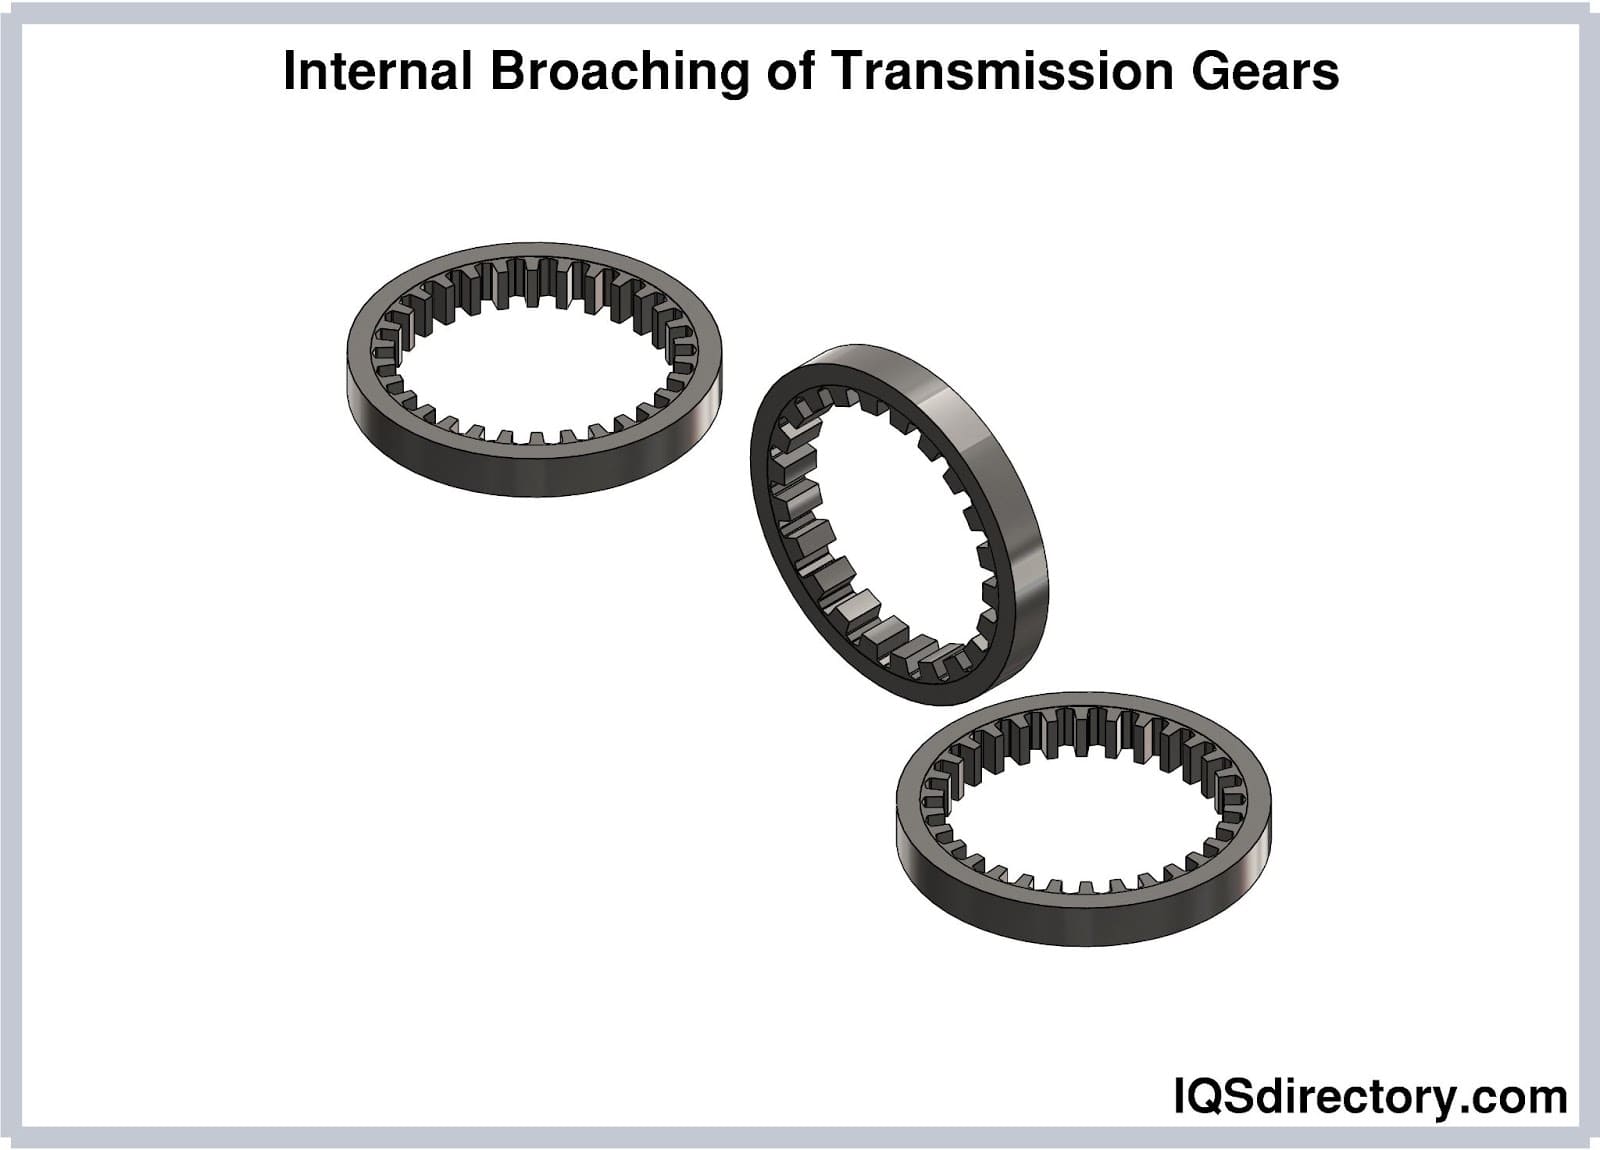 Internal Broaching of Transmission Gears